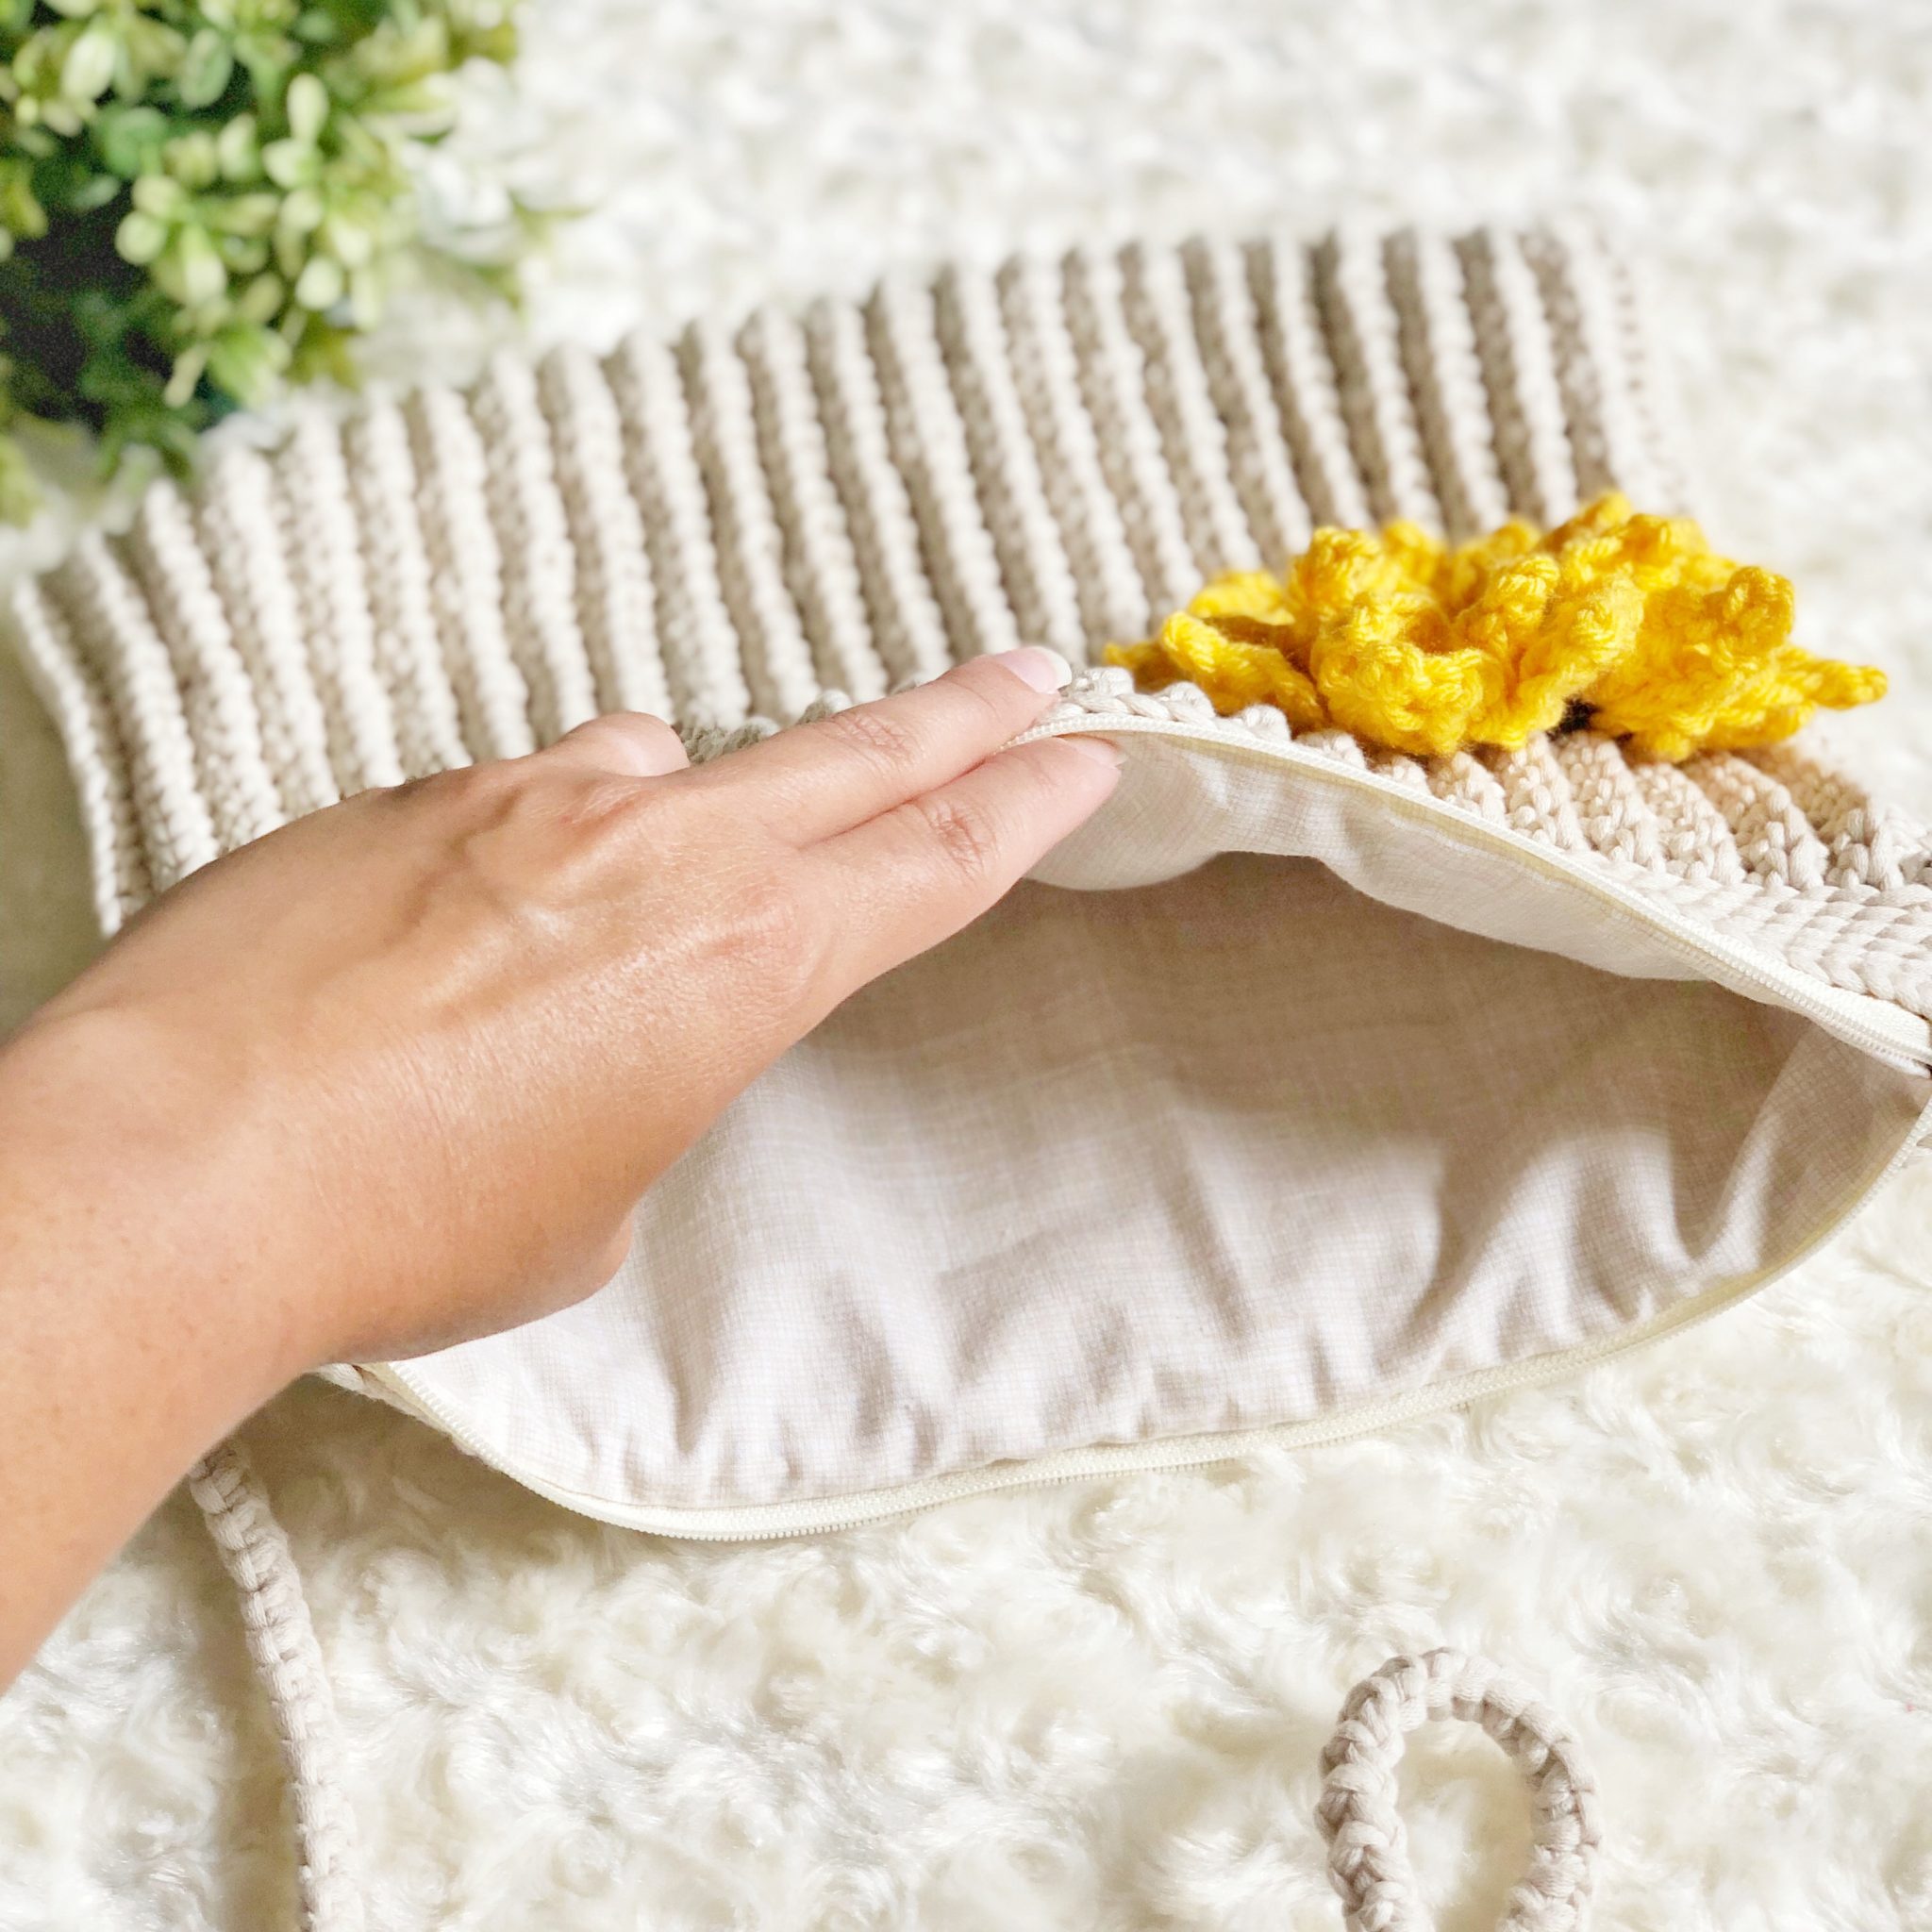 Liner for Crochet Tote - Handbag Angels